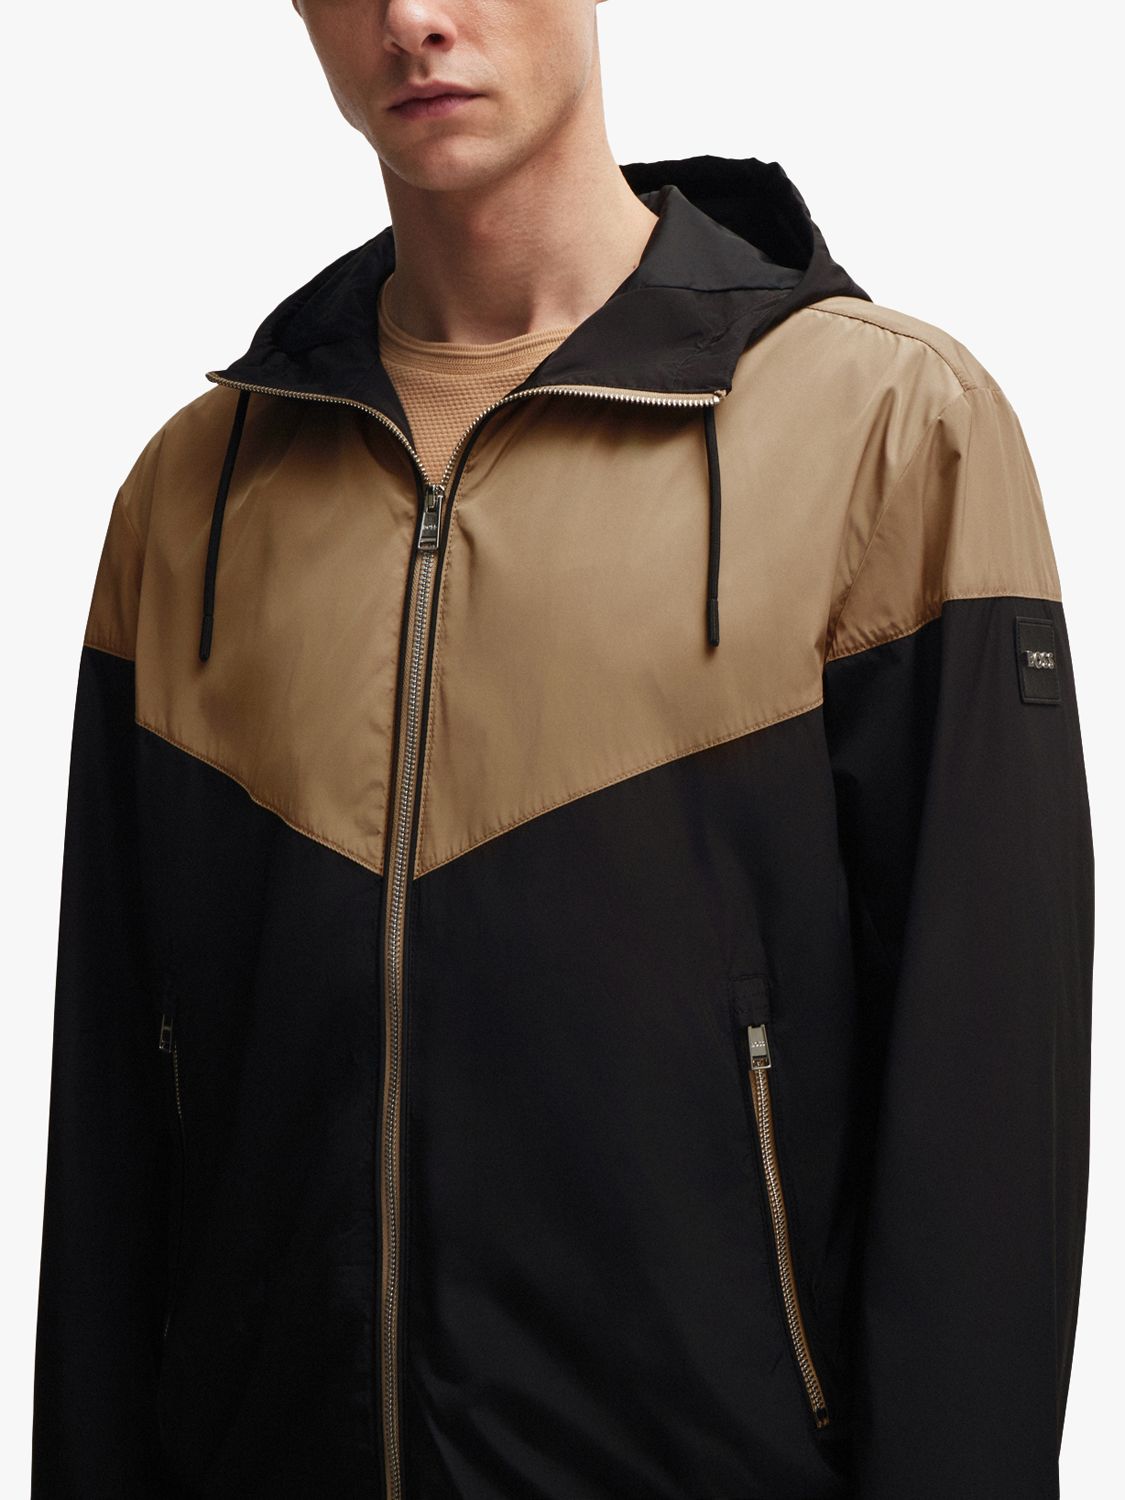 BOSS Cireno Colour Block Hooded Jacket, Medium Beige/Black, 38R